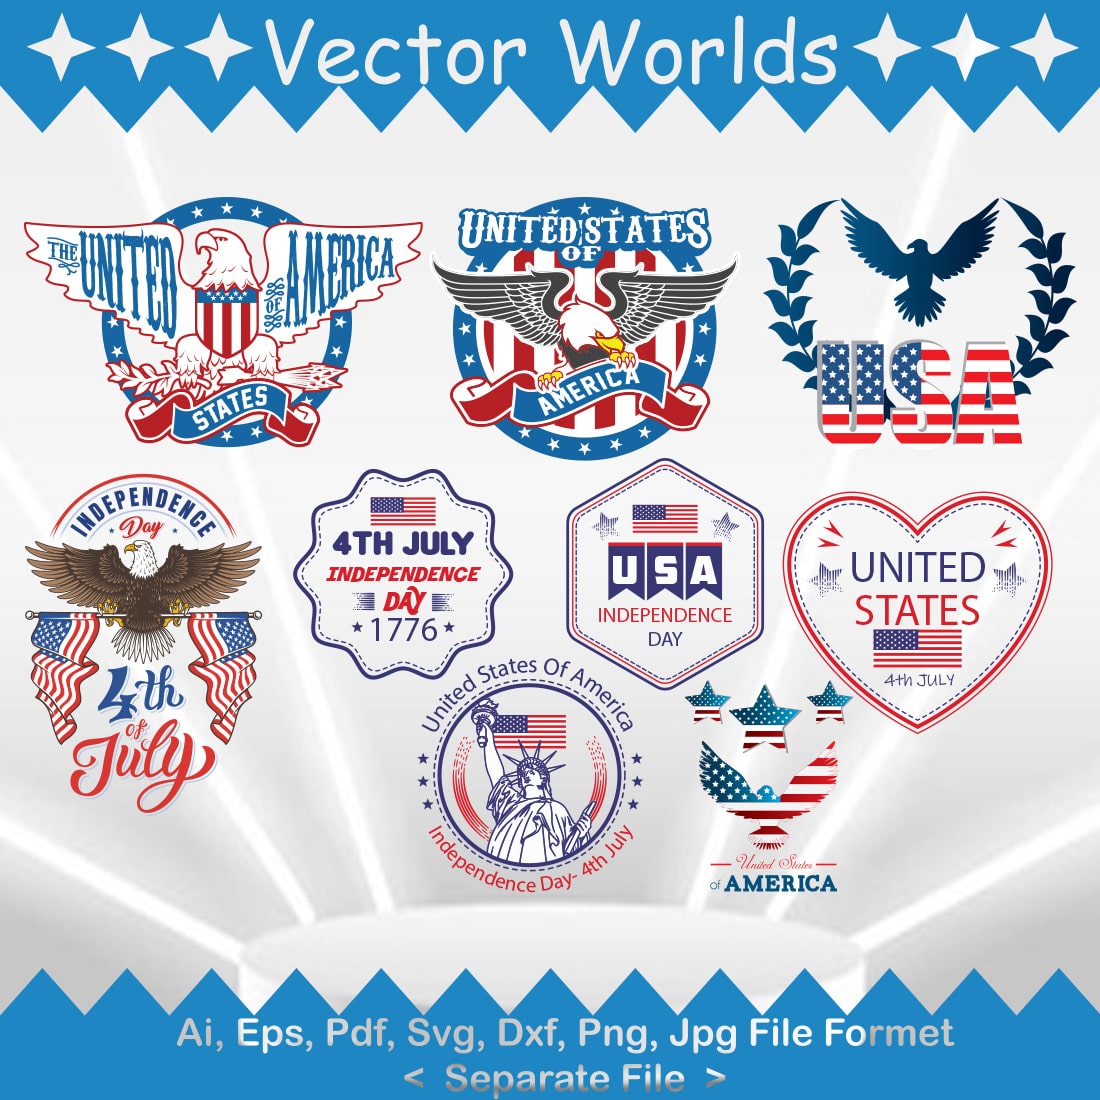 American Eagle Flag SVG Vector Design cover image.